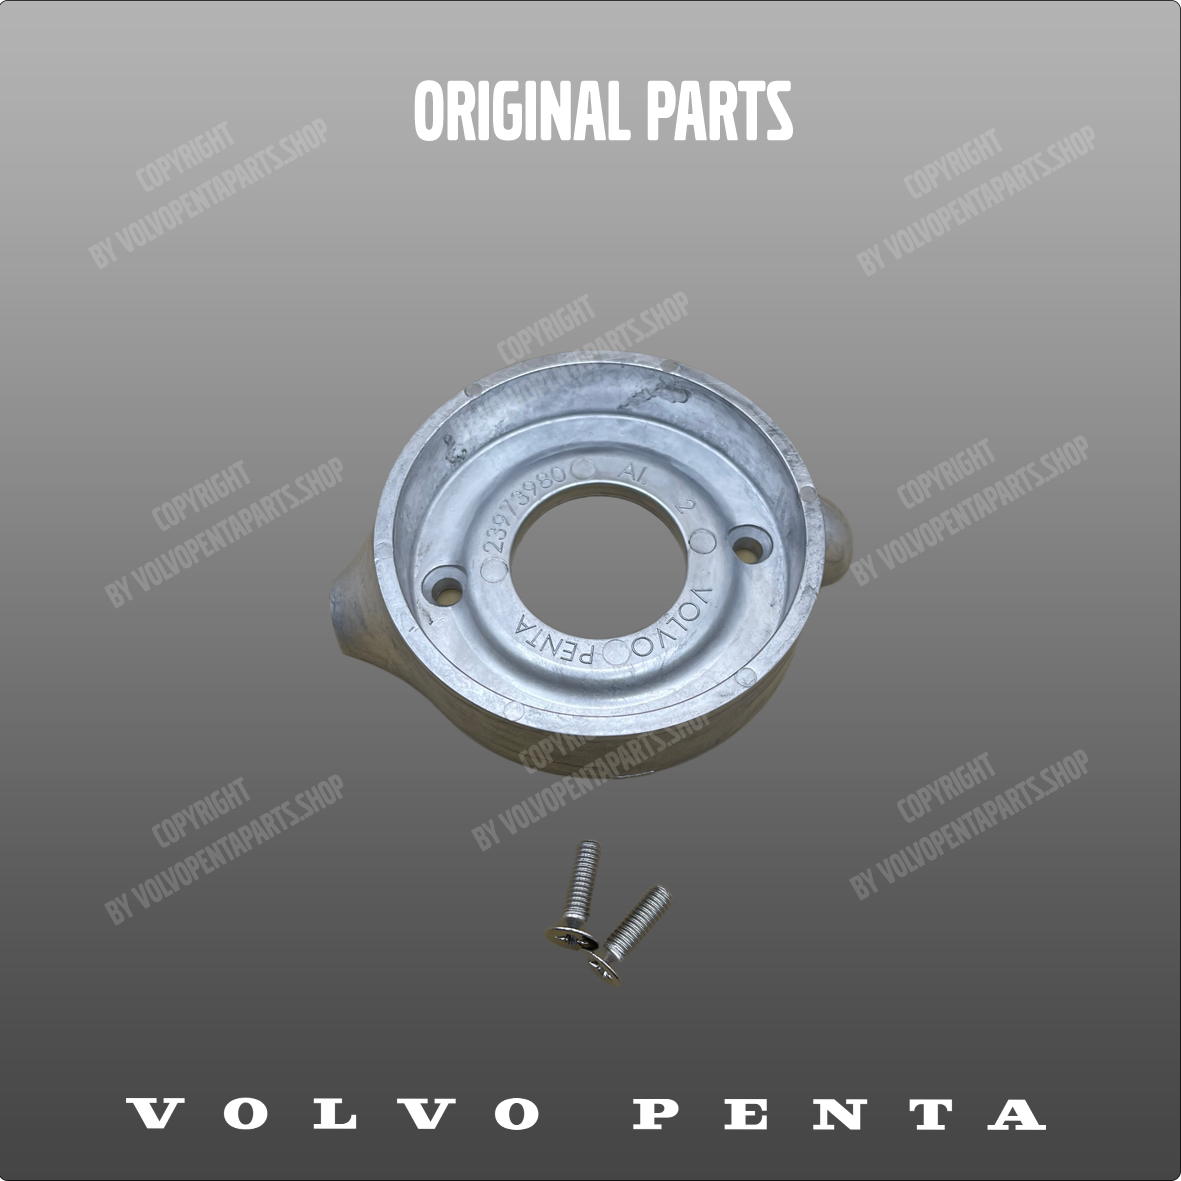 Volvo Penta anode kit 23973978